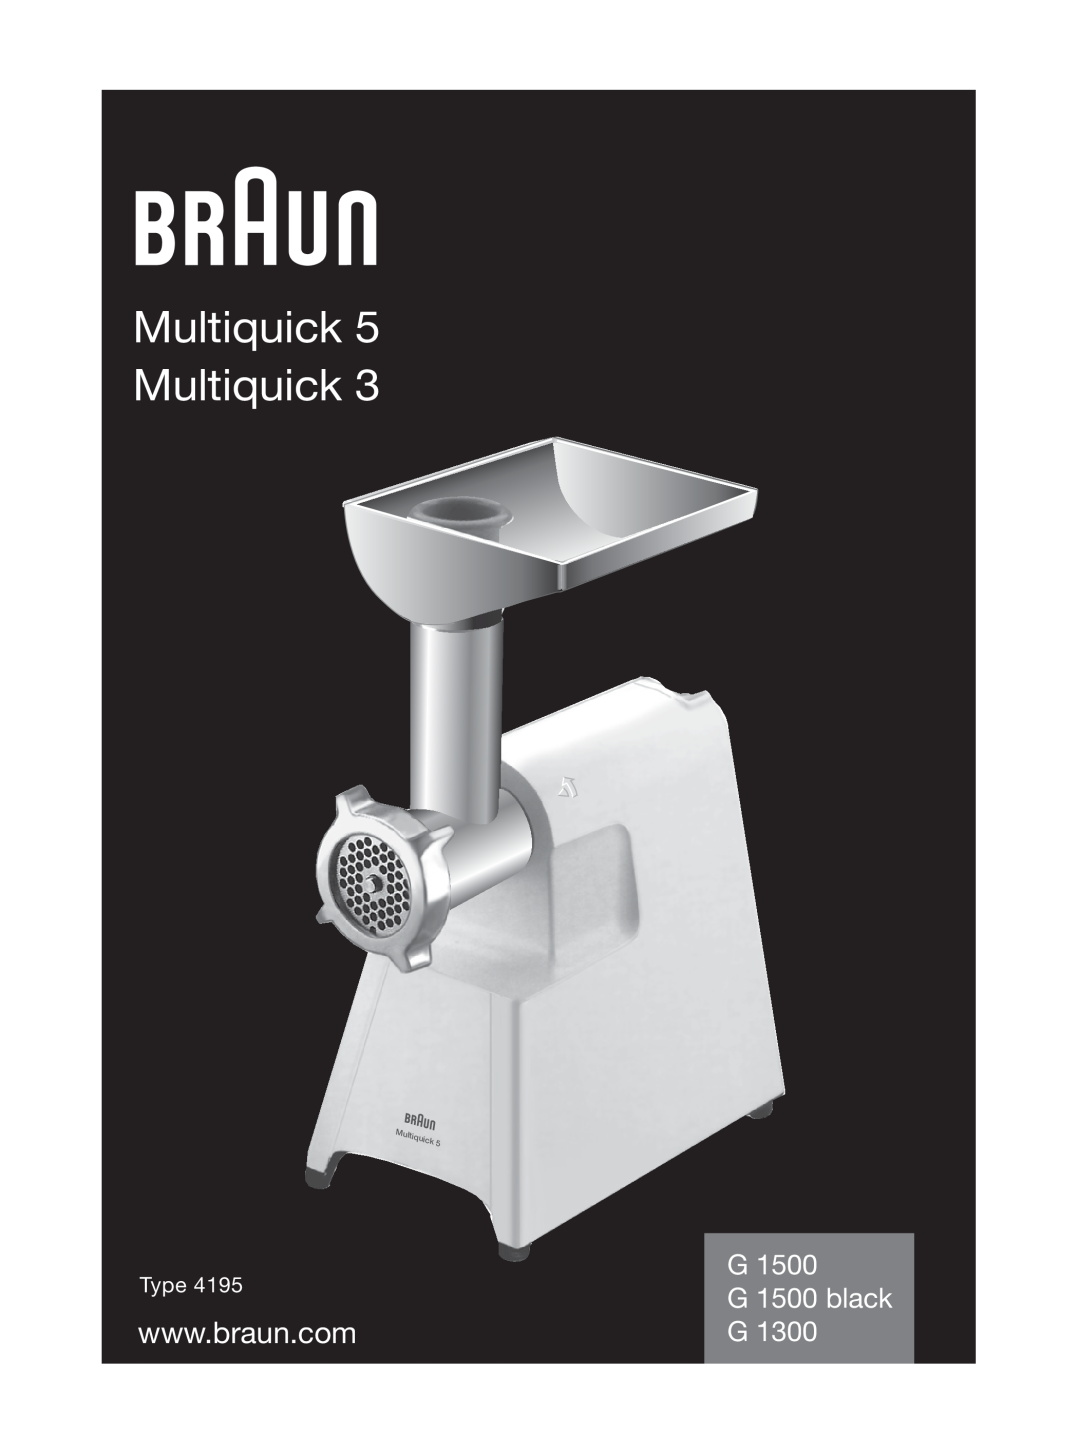 Braun manual Multiquick 5 Multiquick, G G 1500 black, Type 